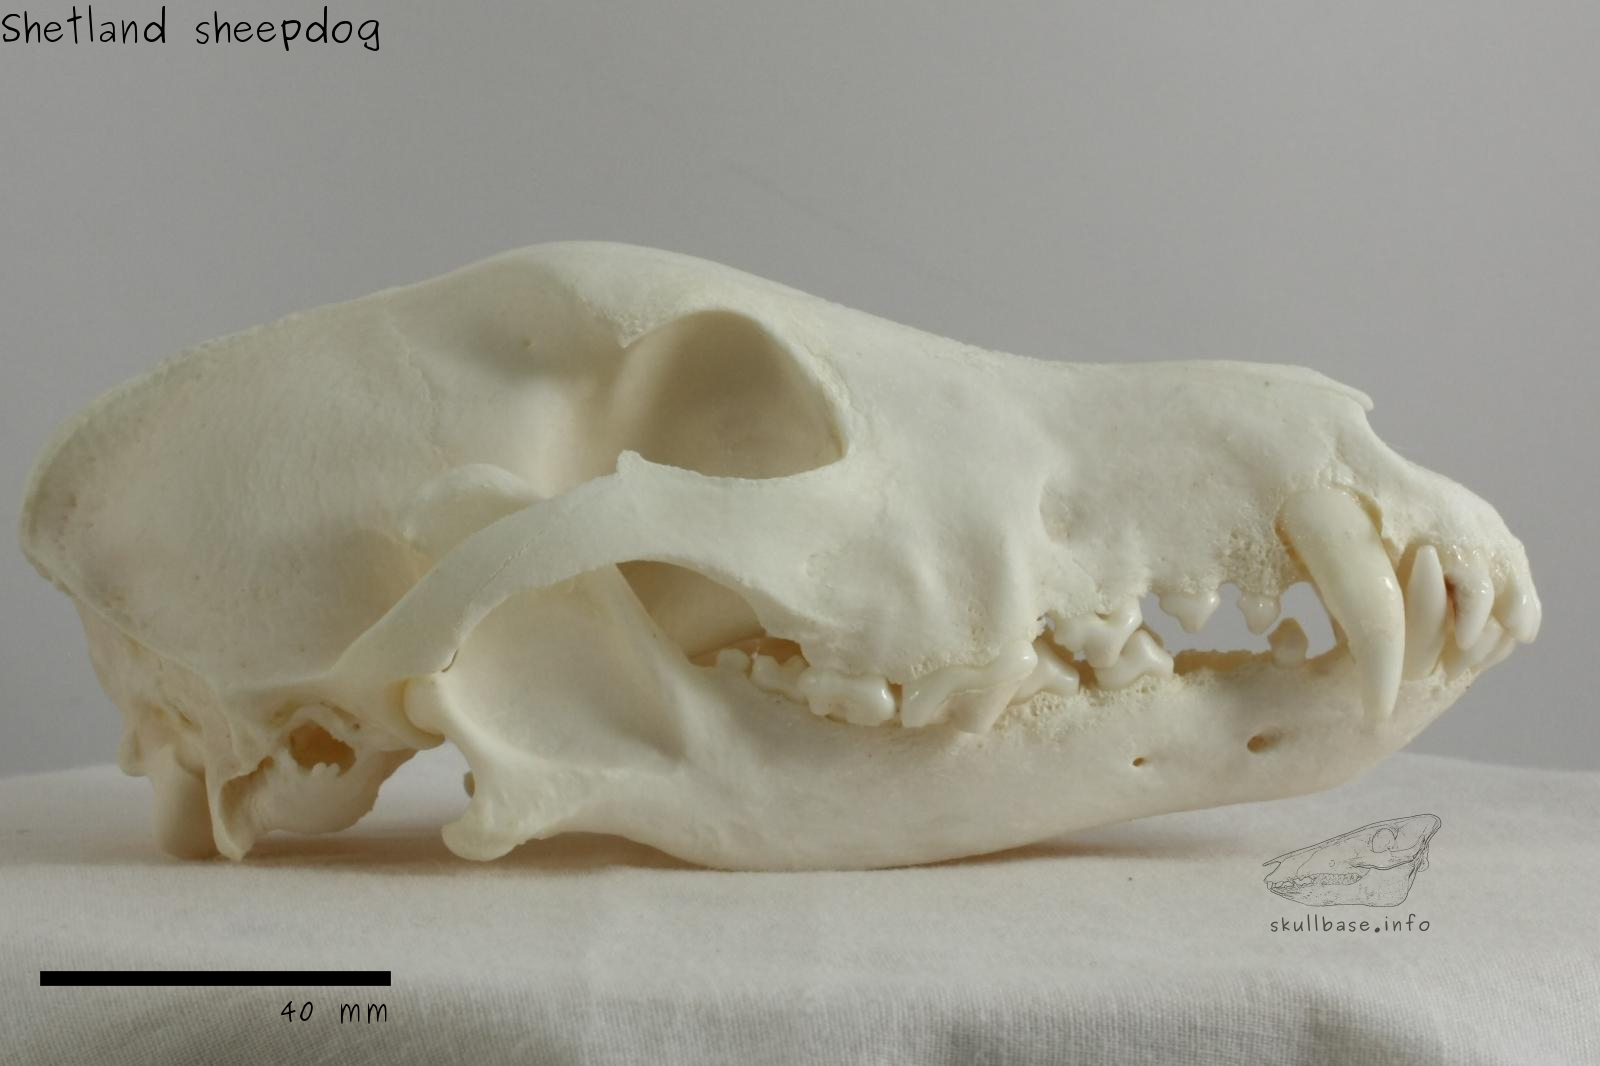 Shetland sheepdog (Canis lupus familiaris) skull lateral view